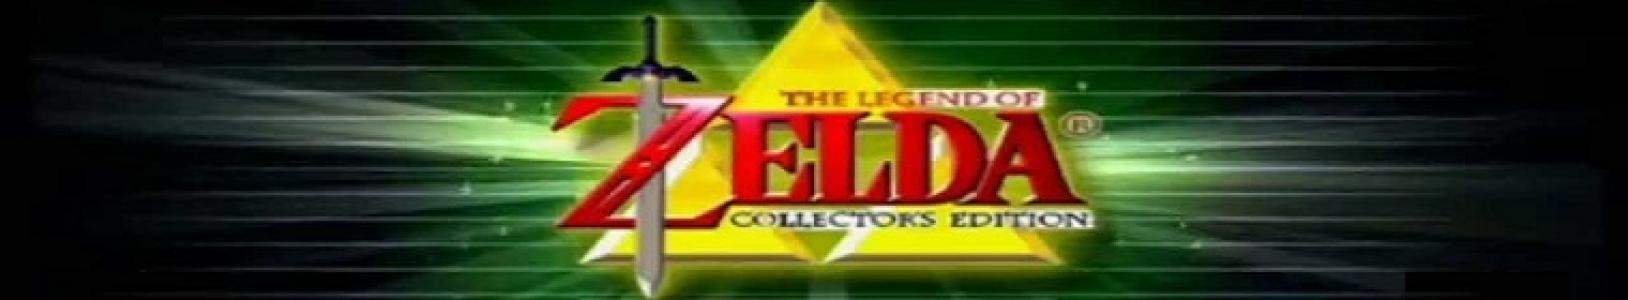 The Legend of Zelda: Collector's Edition banner